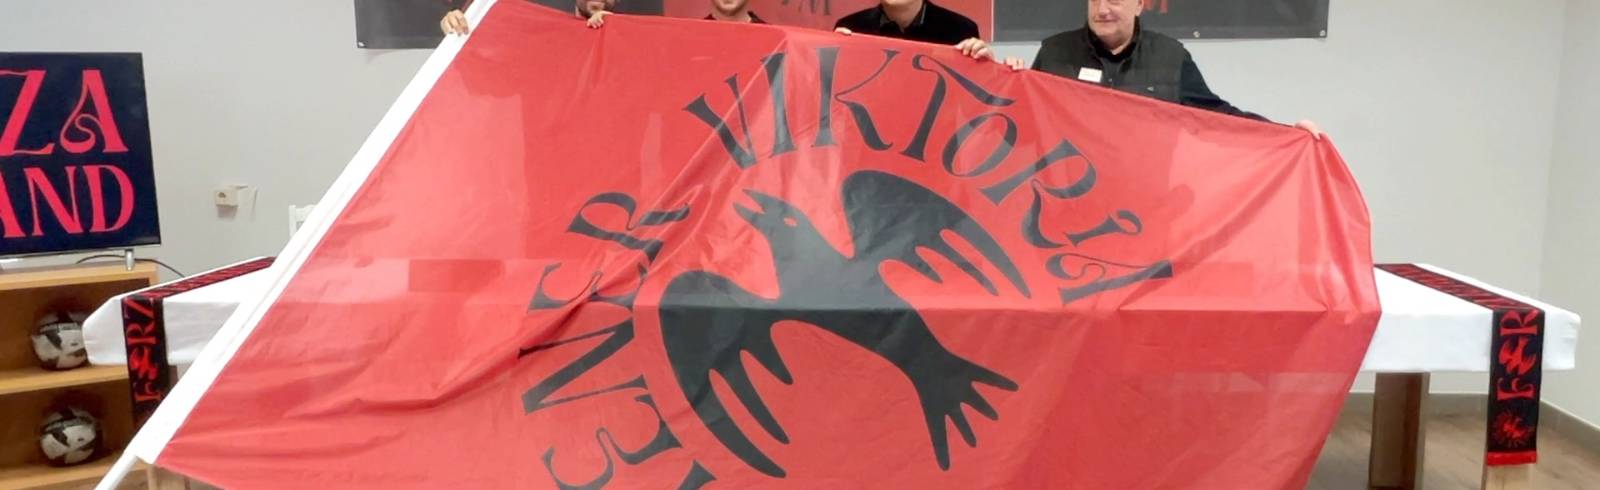 Forza leiwand: Wiener Viktoria positioniert sich neu